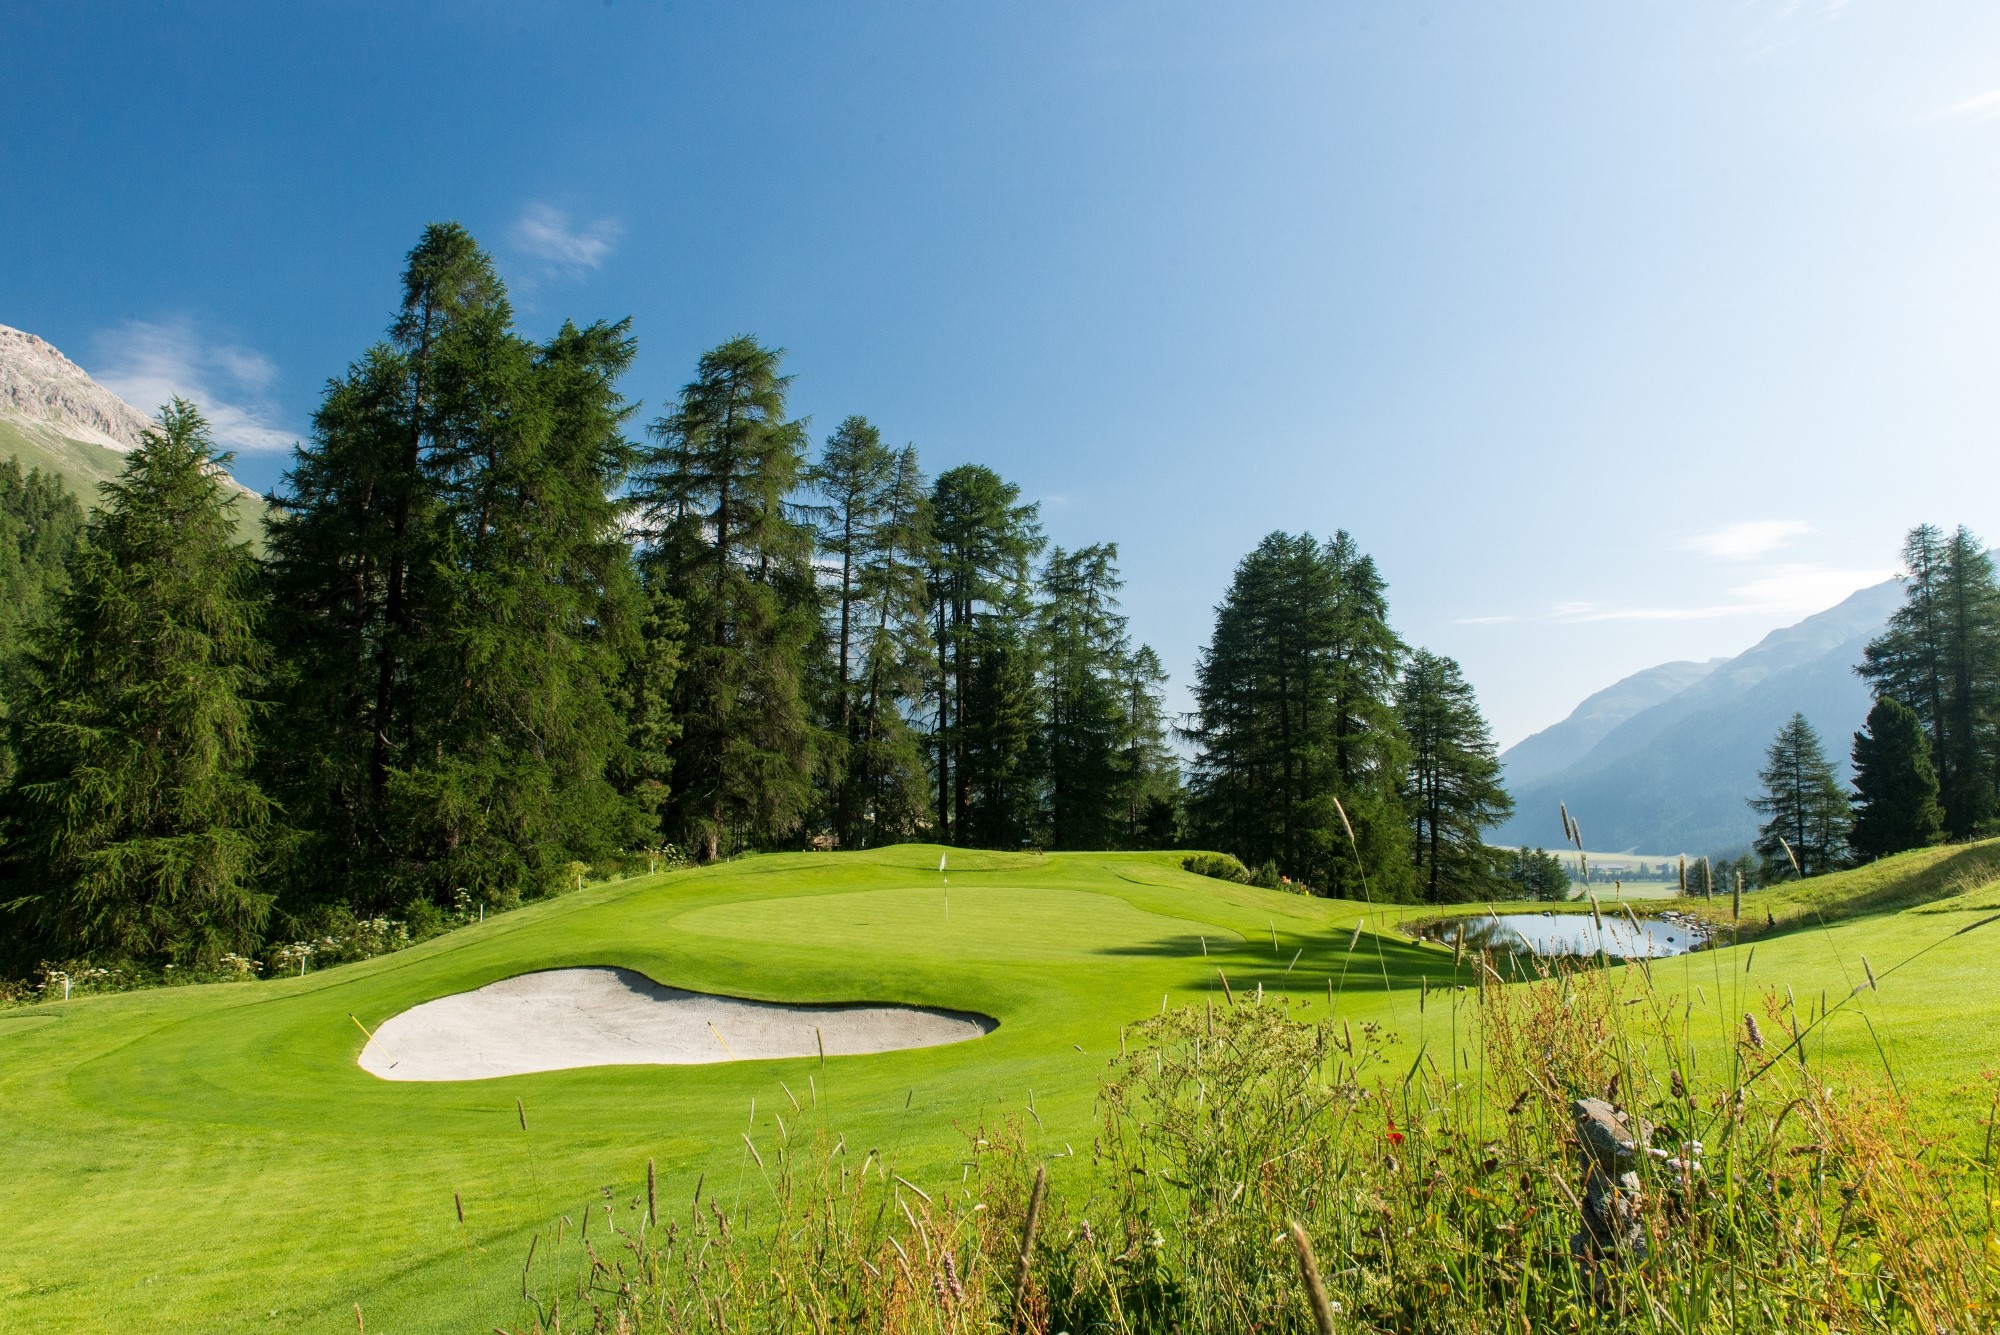 Det østlige Schweiz, Schweiz, Kulm Golf Course